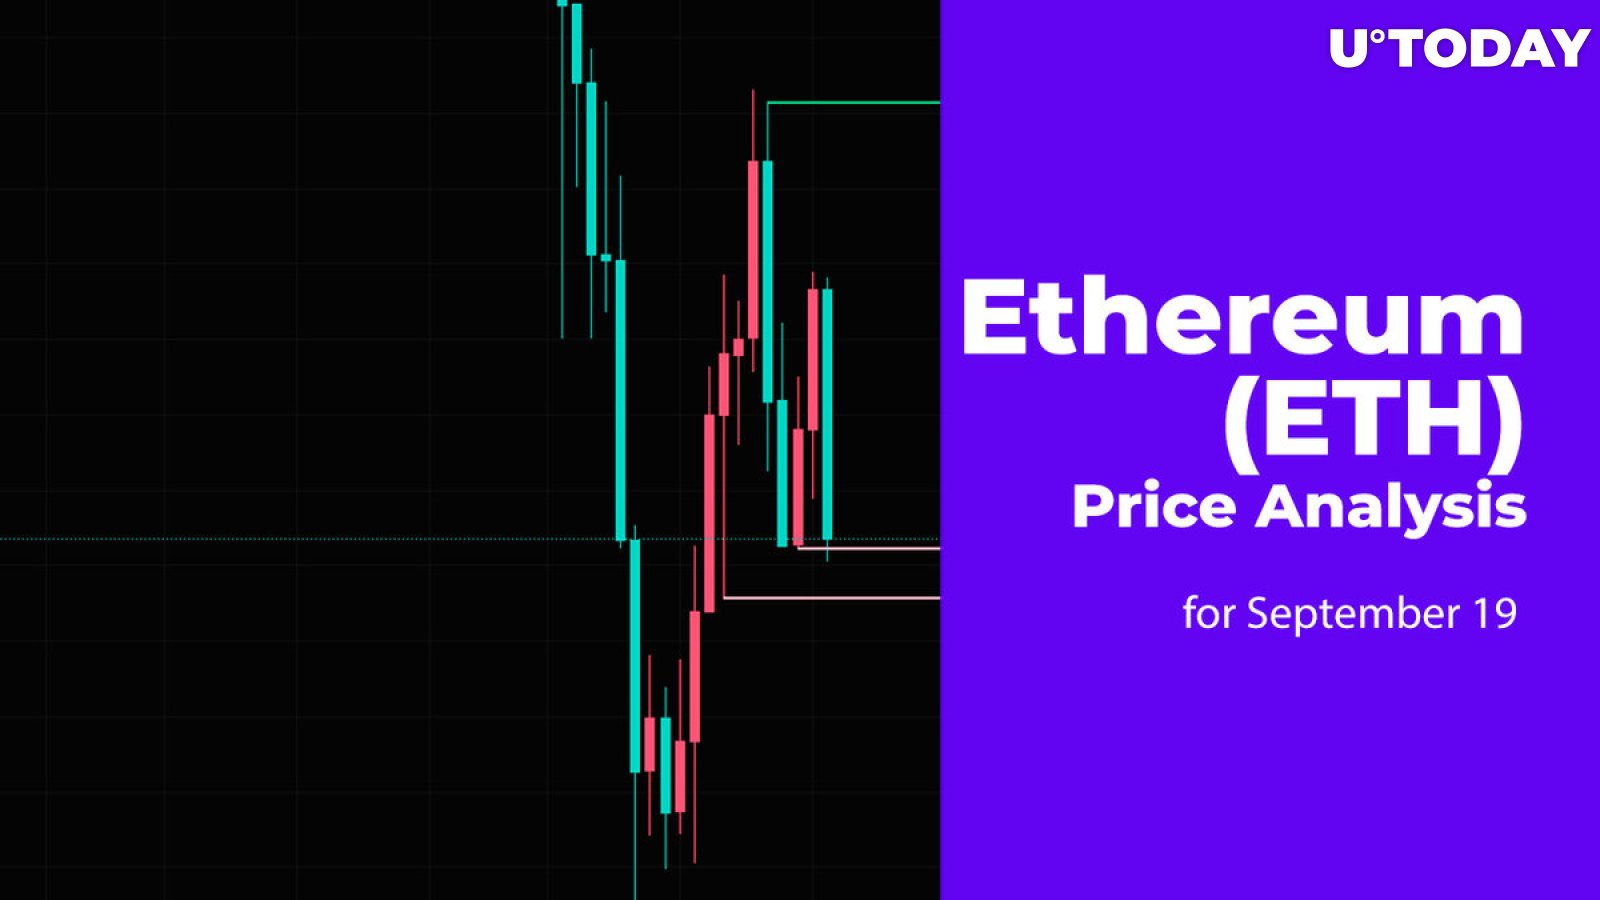 Ethereum (ETH) Price Analysis for September 19